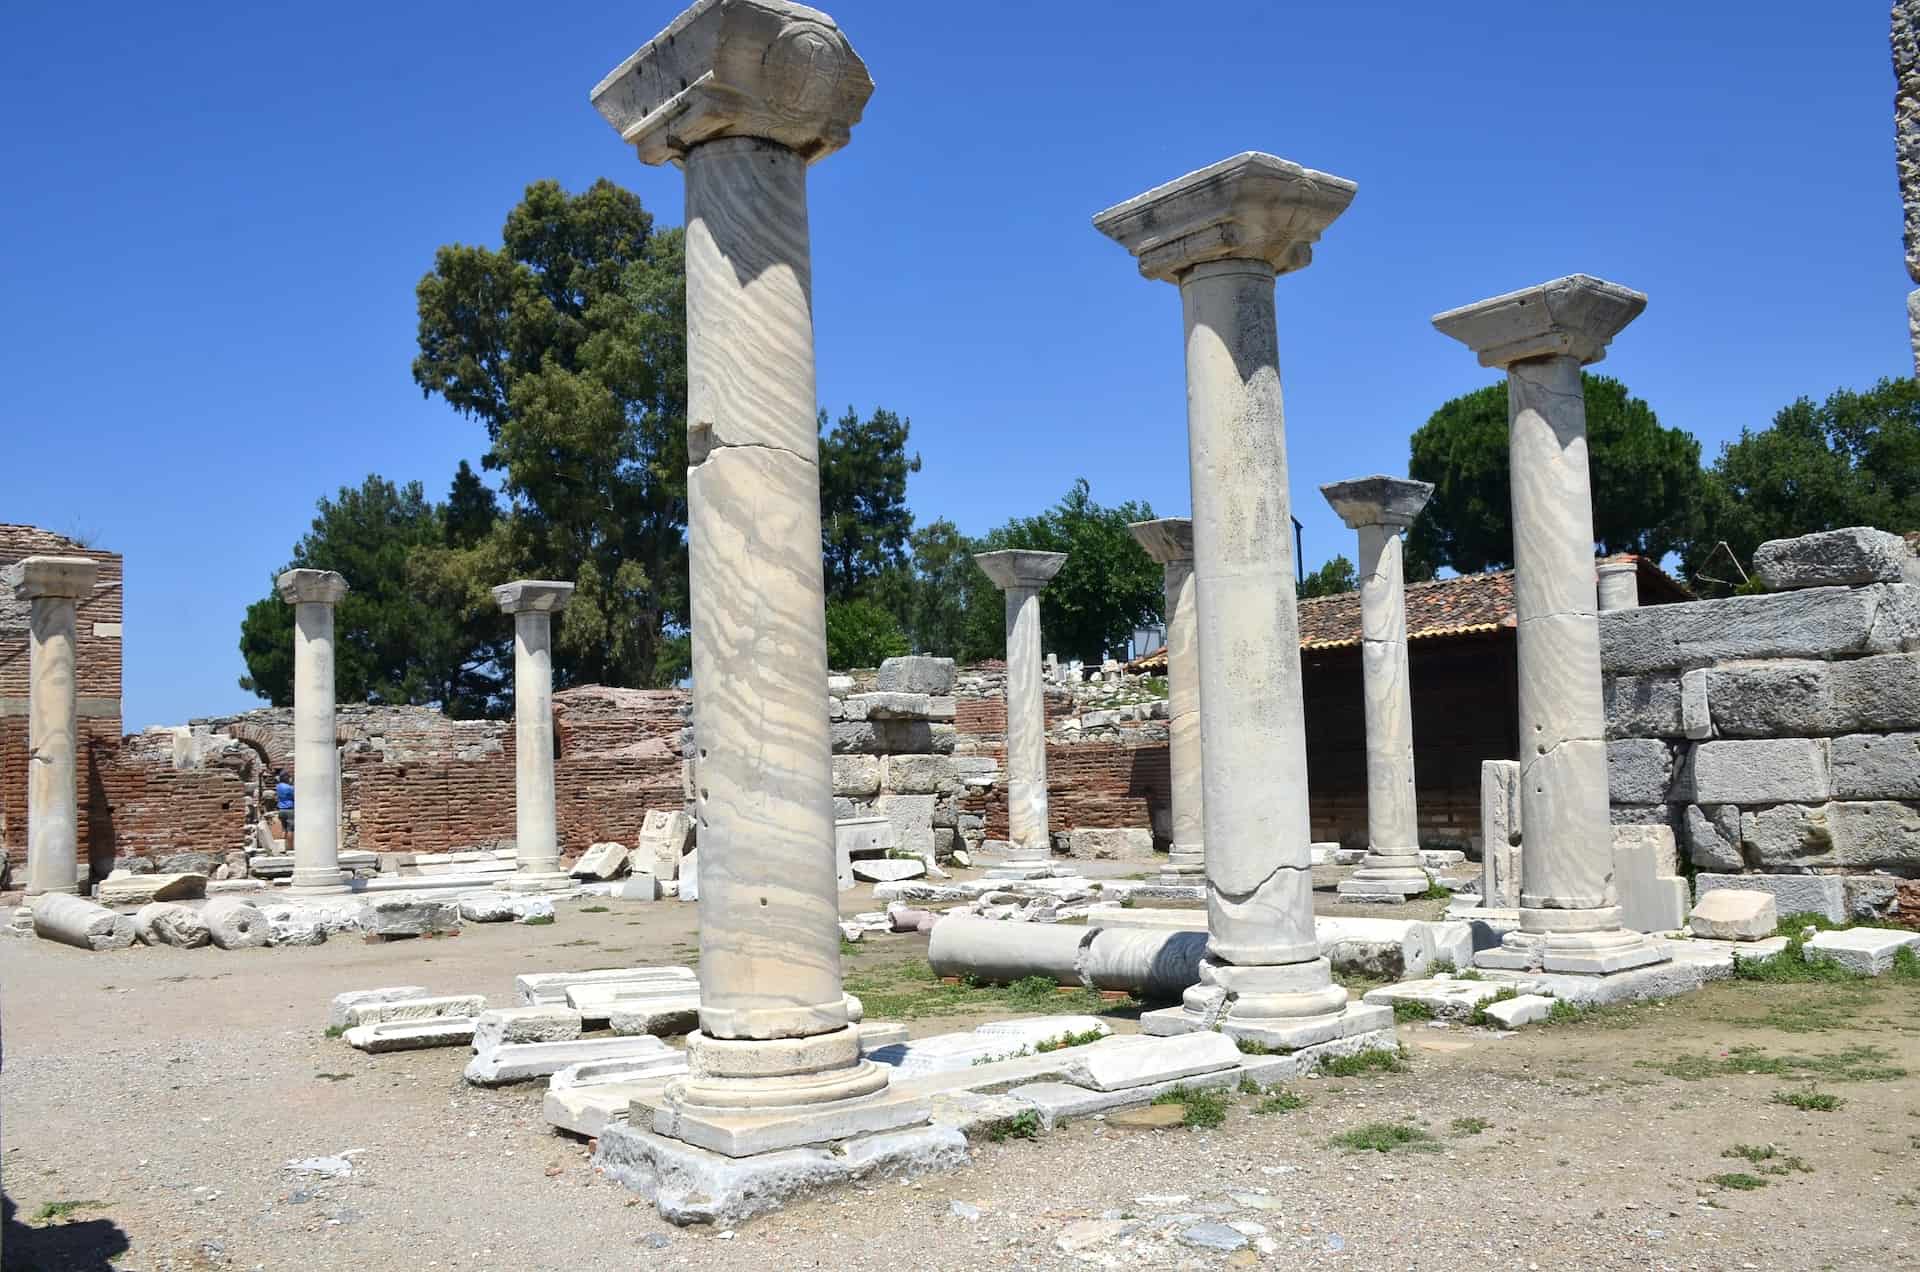 Columns of the north transept of the Basilica of Saint John in Selçuk, Turkey